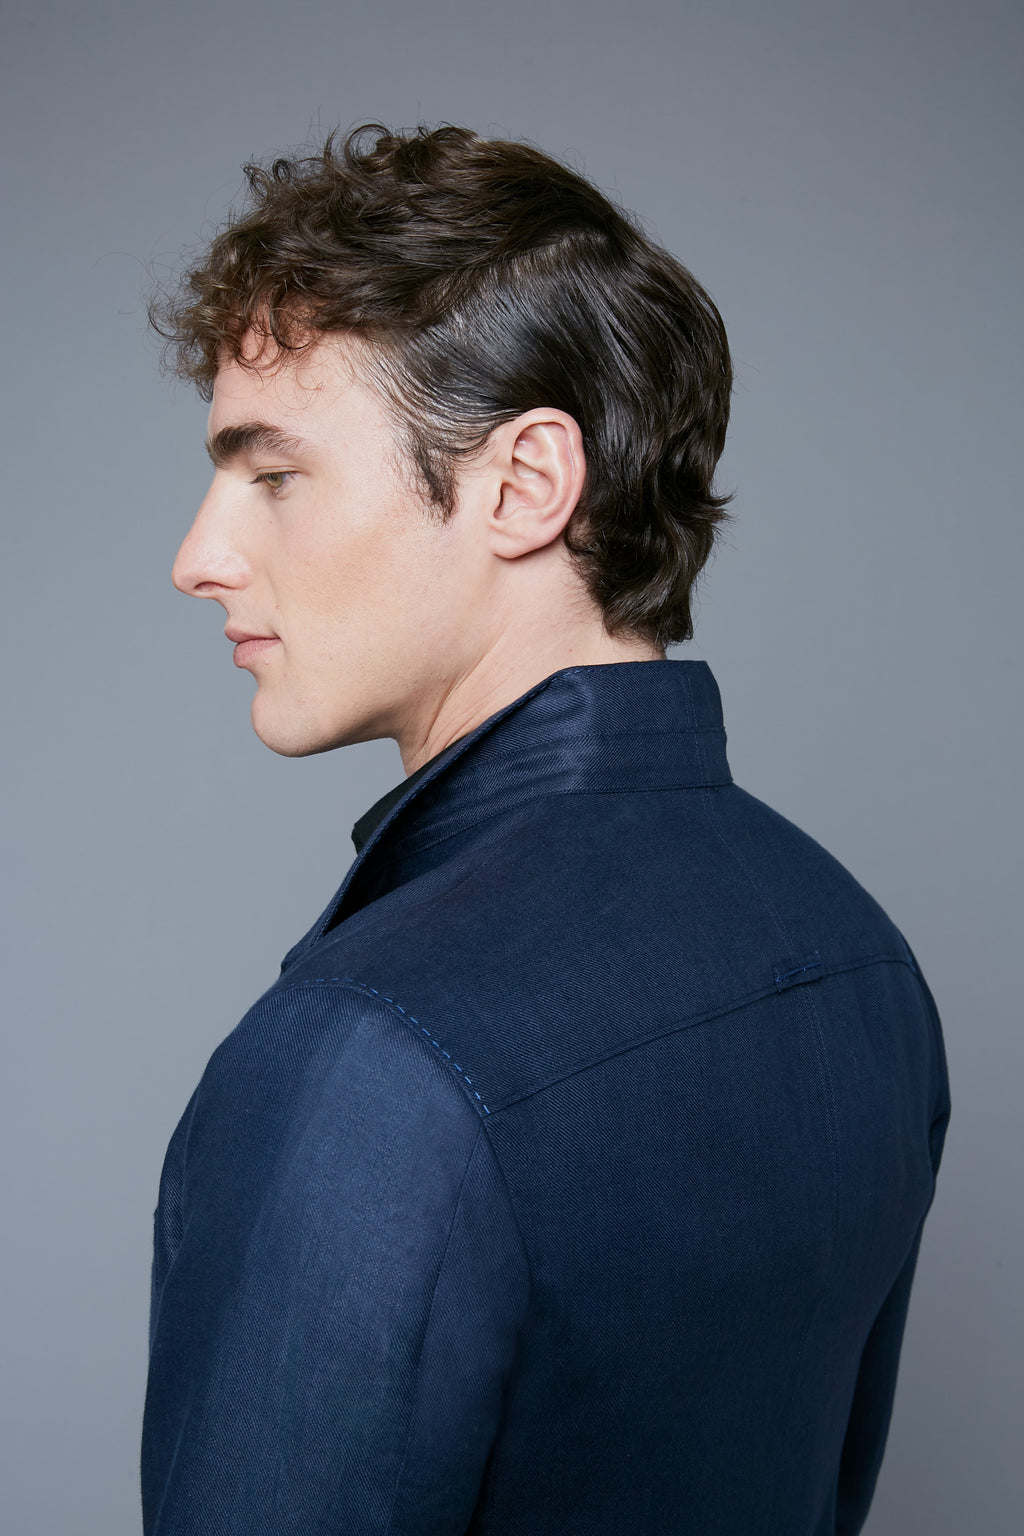 Detail View: Model Hans Weiner wearing Architect's Jacket